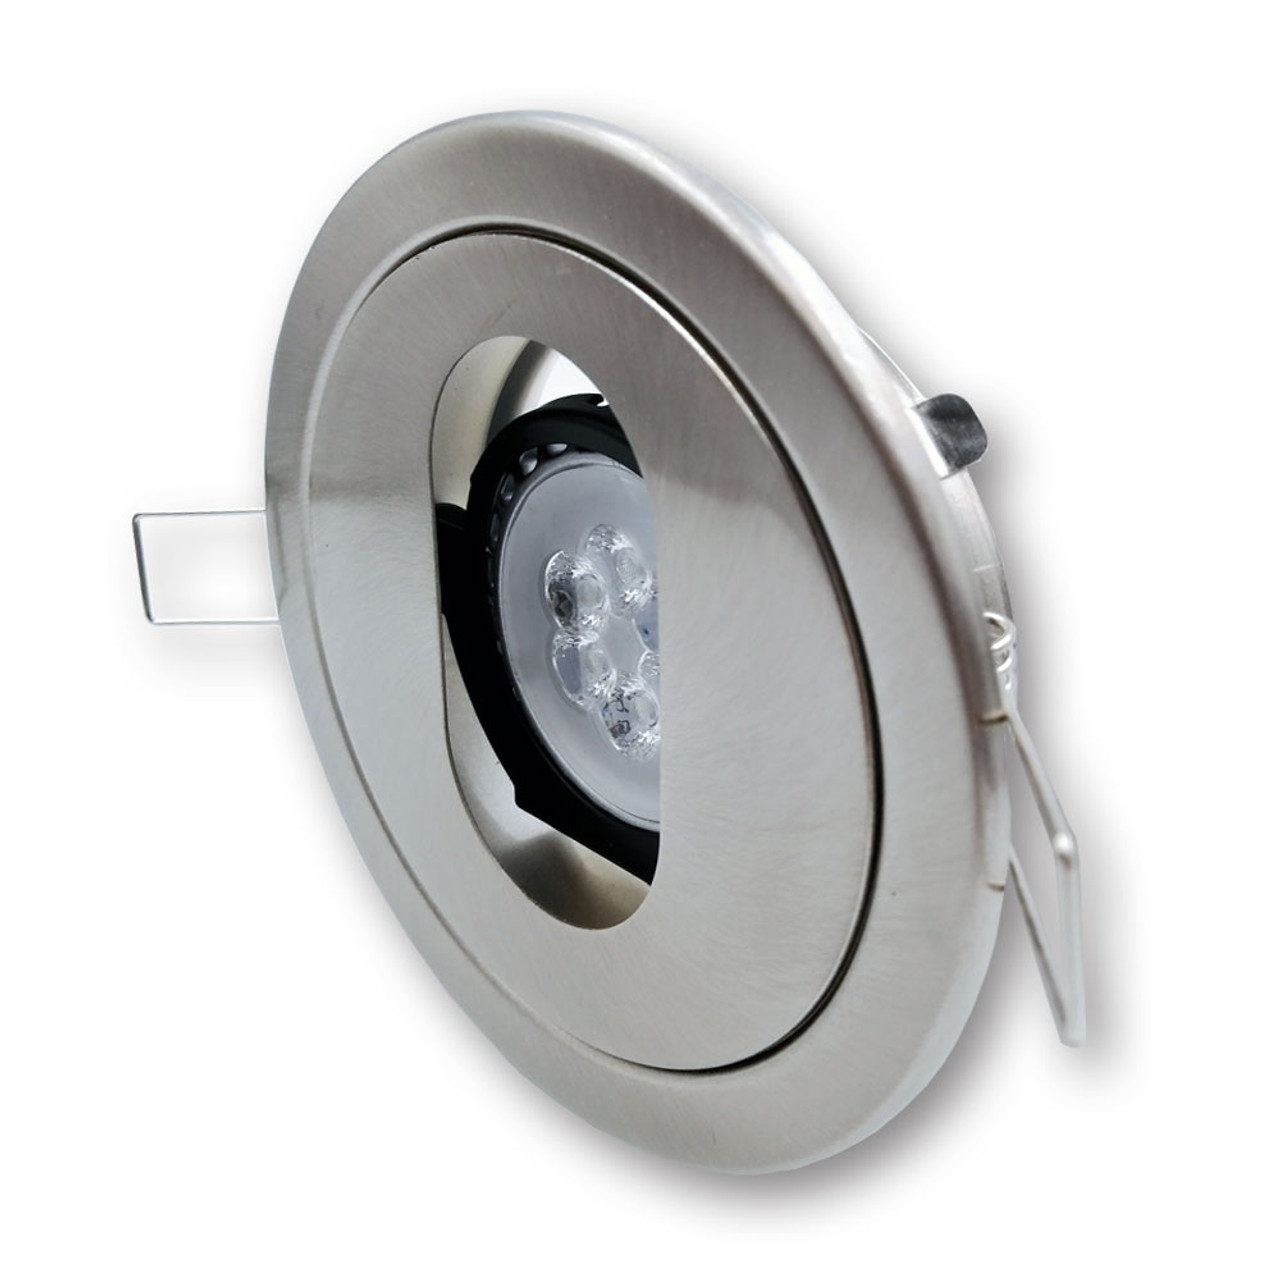 Mega LED - Corfu Downlight Fixture - Aluminum Alloy, For MR16 or GU10 Bulbs, Satin Chrome Trim Finish (CORFU-CH) - Apollo Lighting